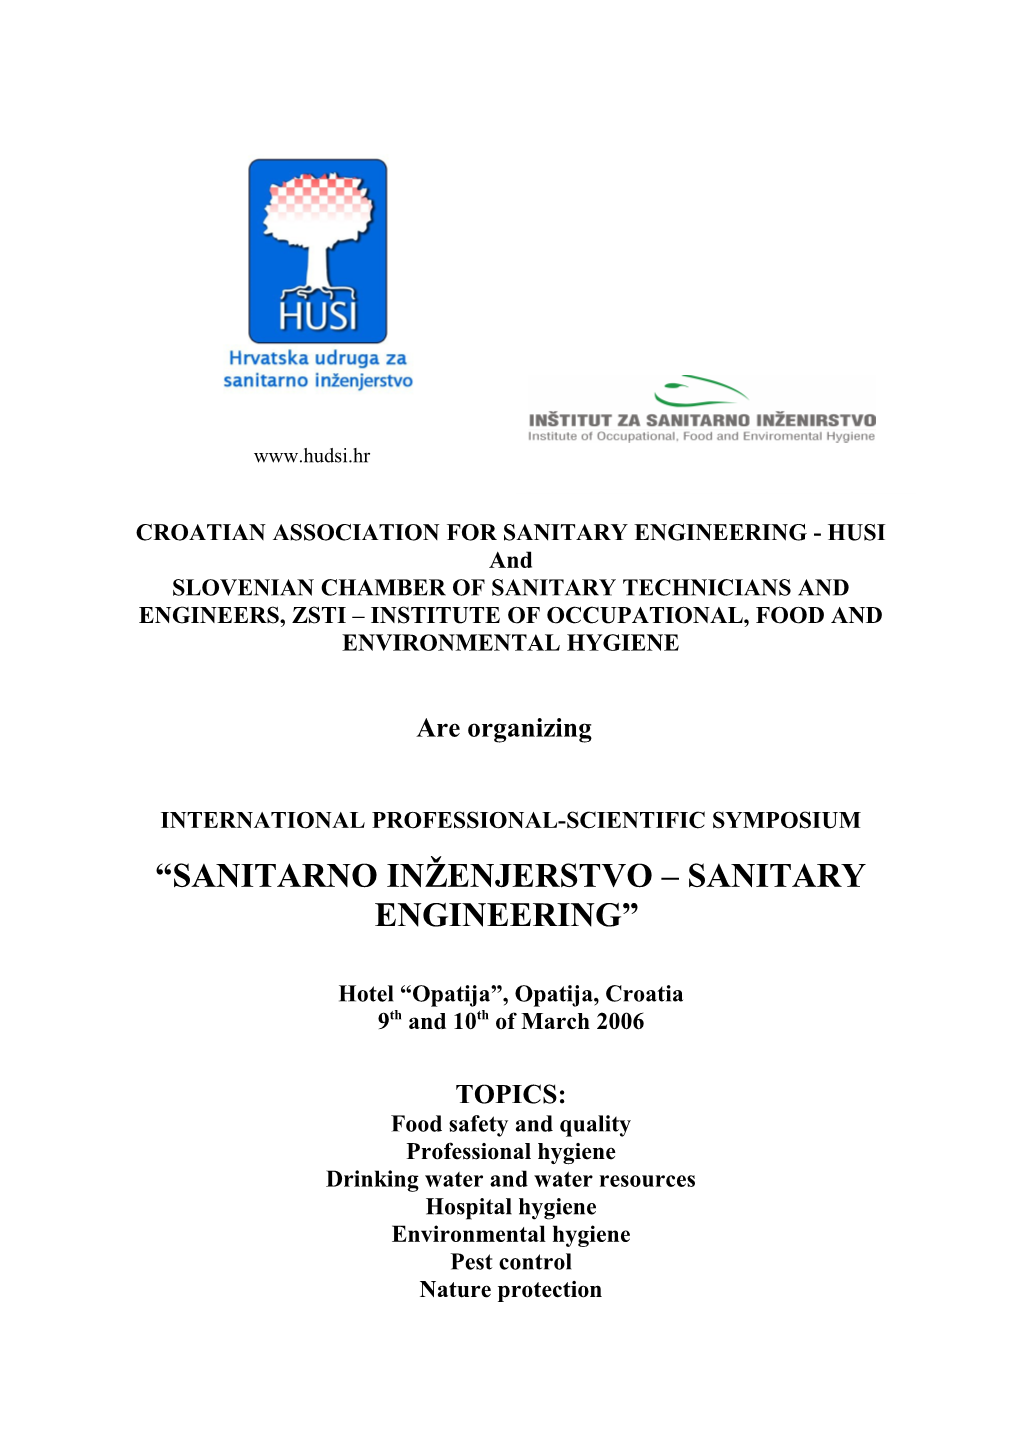 Croatian Association for Sanitary Engineering - Husi